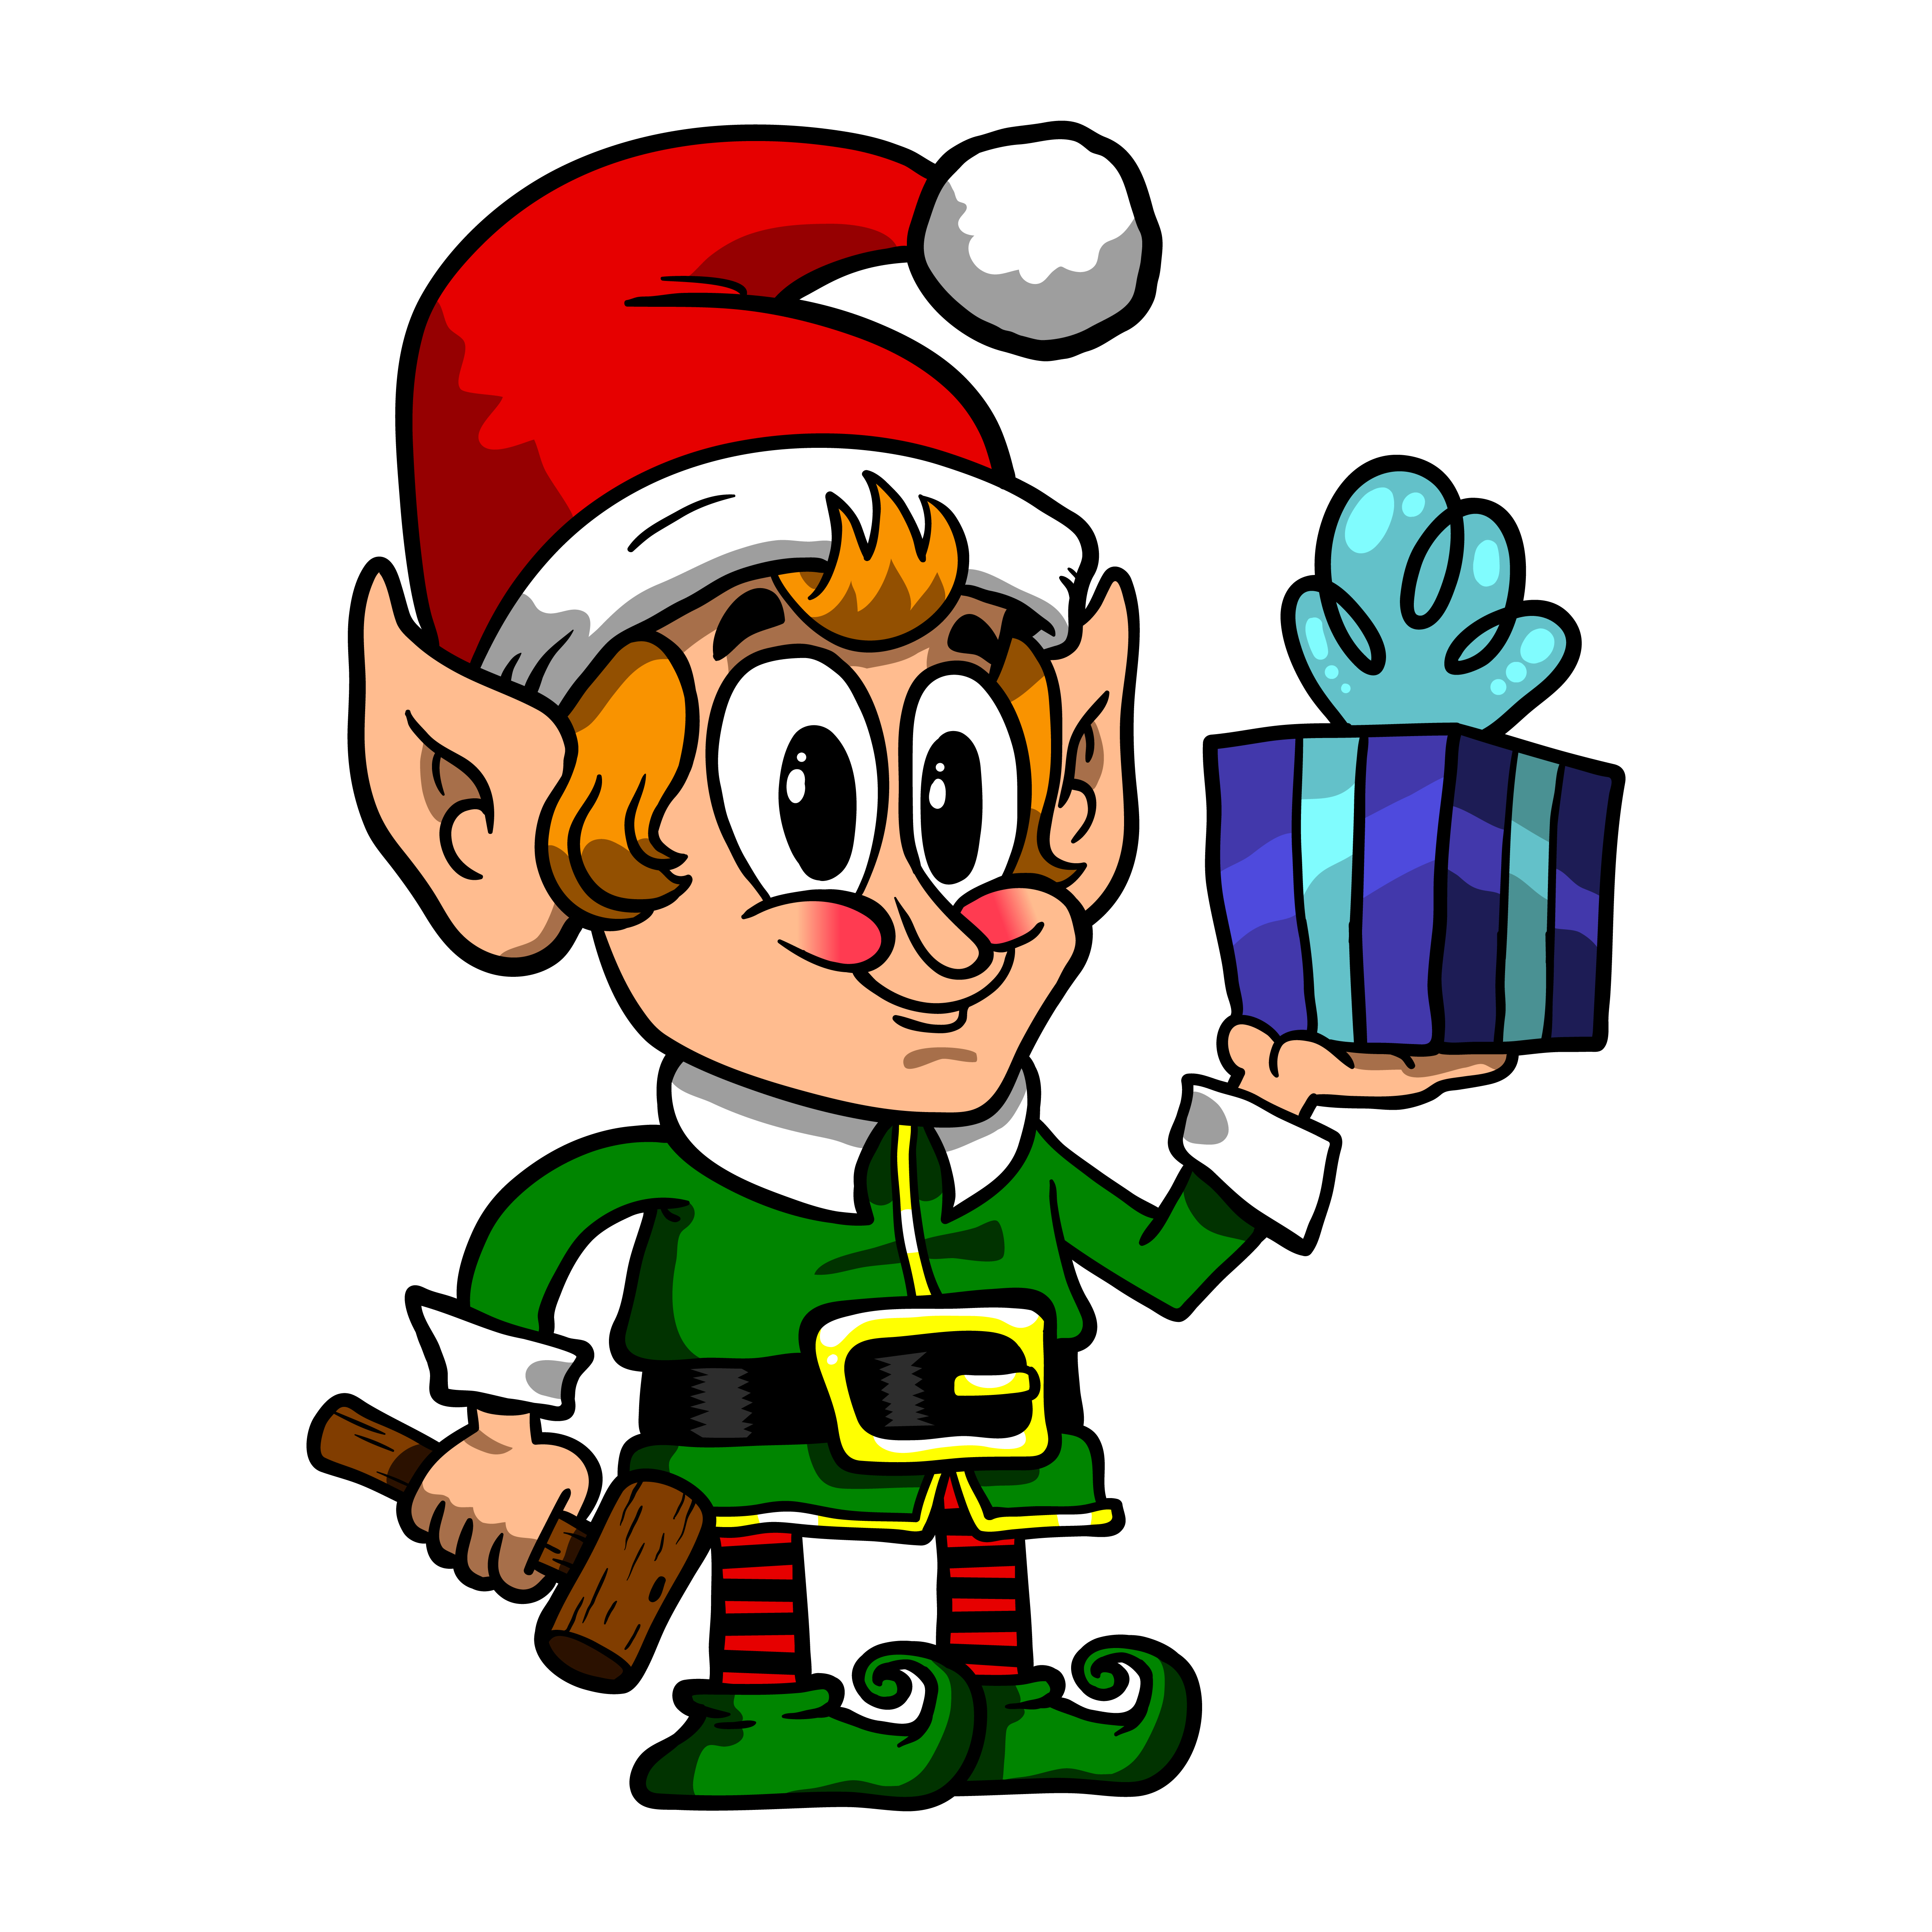 Download Cute Christmas elf - Download Free Vector Art, Stock ...